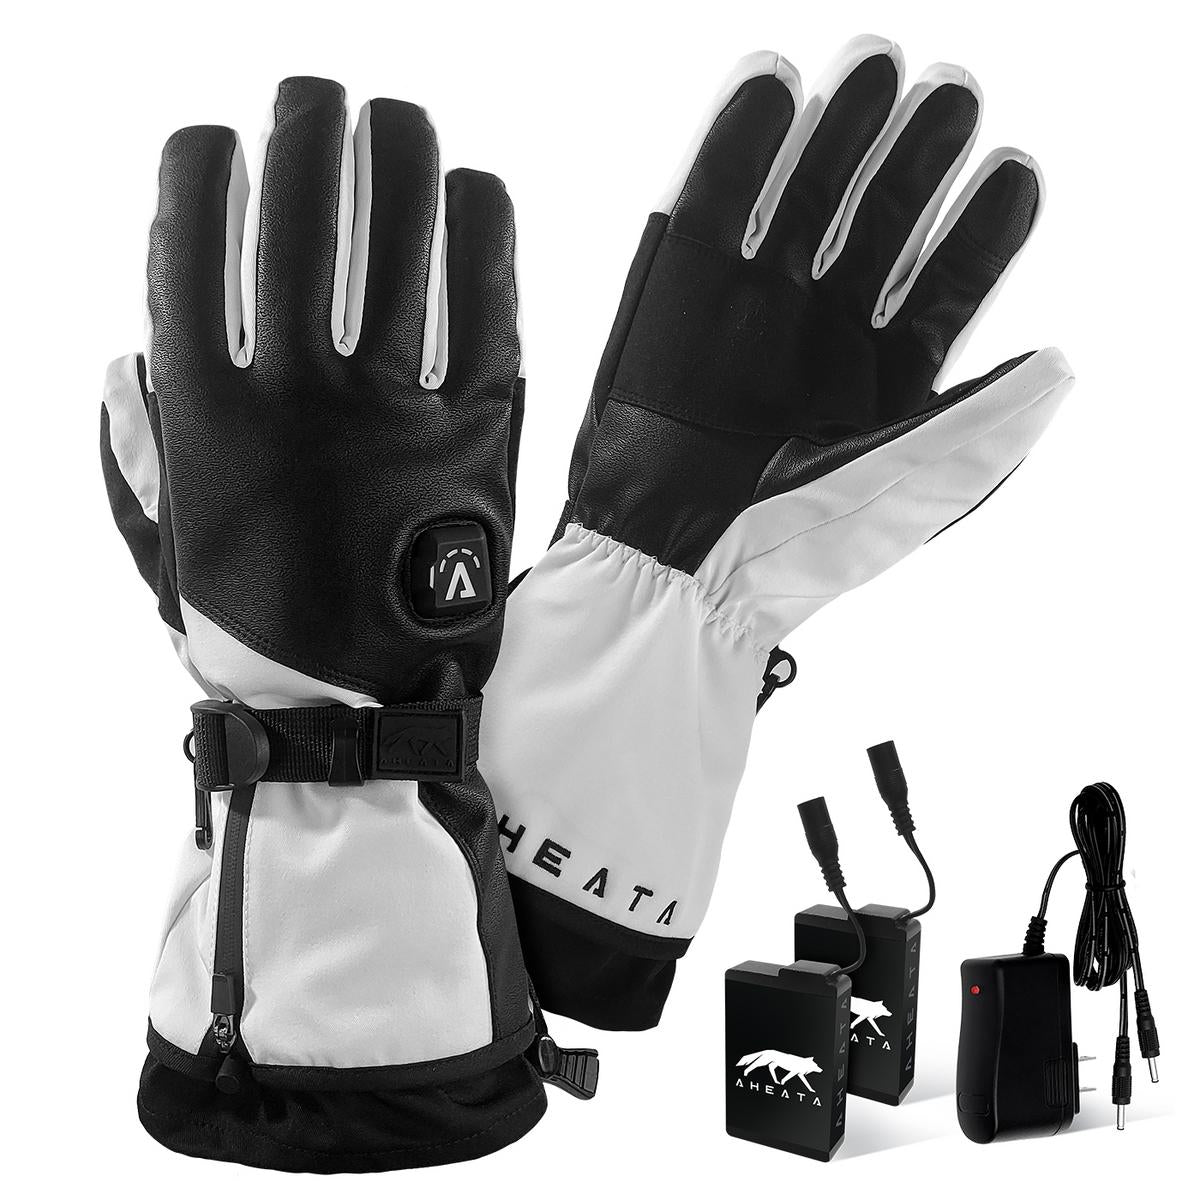 Aheata 7V Battery Heated Flex Textile Gloves - Back